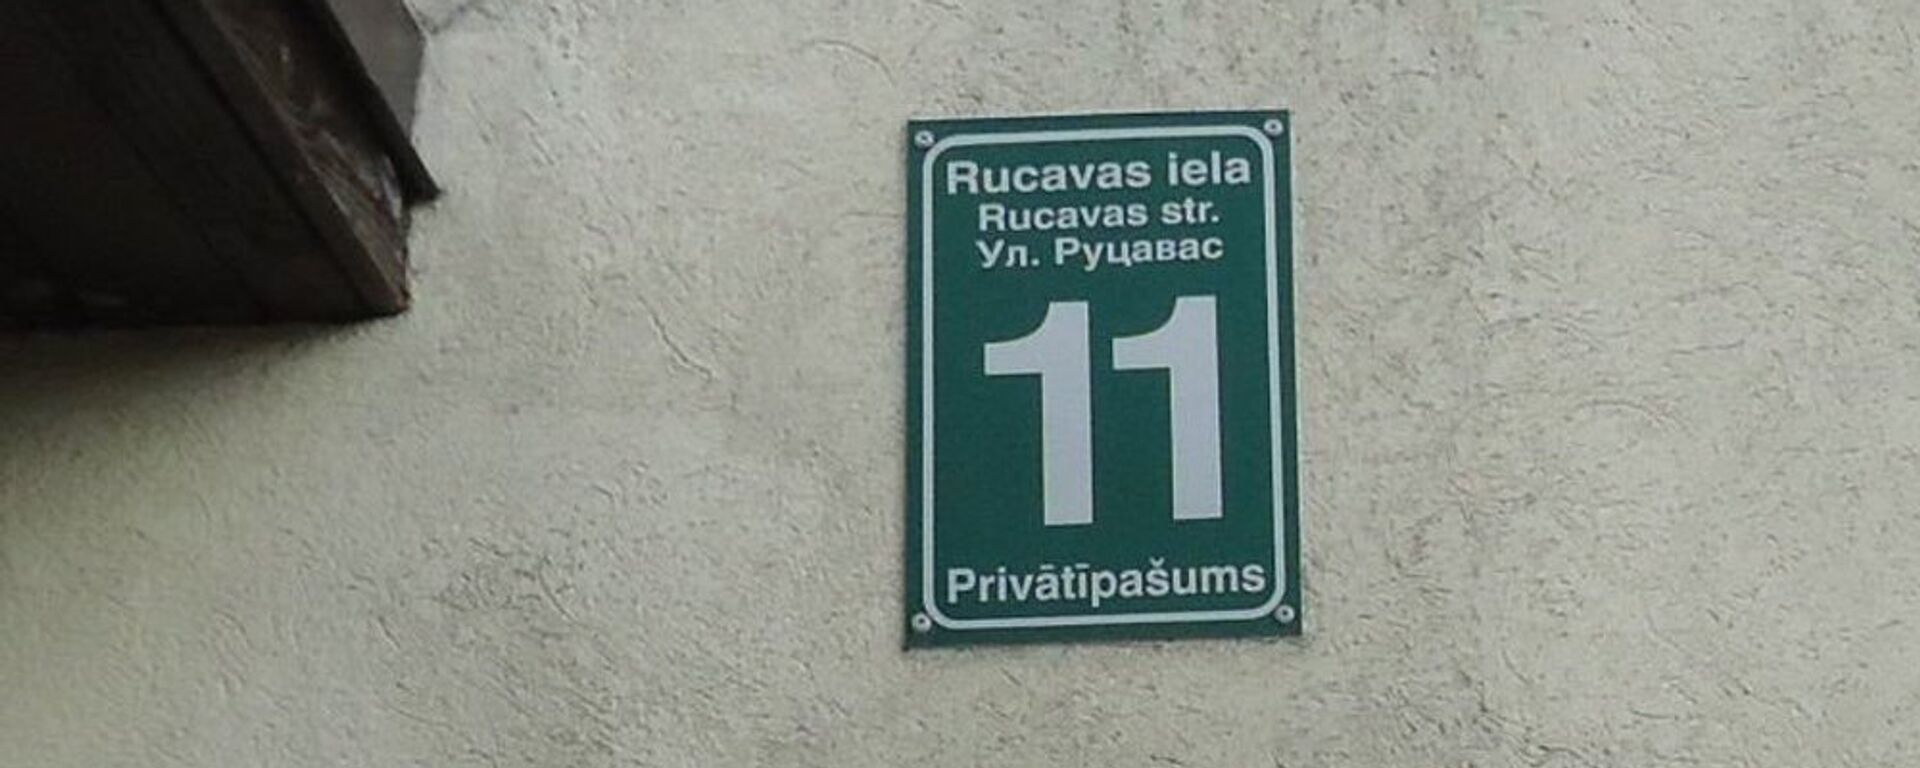 Табличка на доме в Лиепае по адресу Руцавас, 11 - Sputnik Латвия, 1920, 19.12.2017